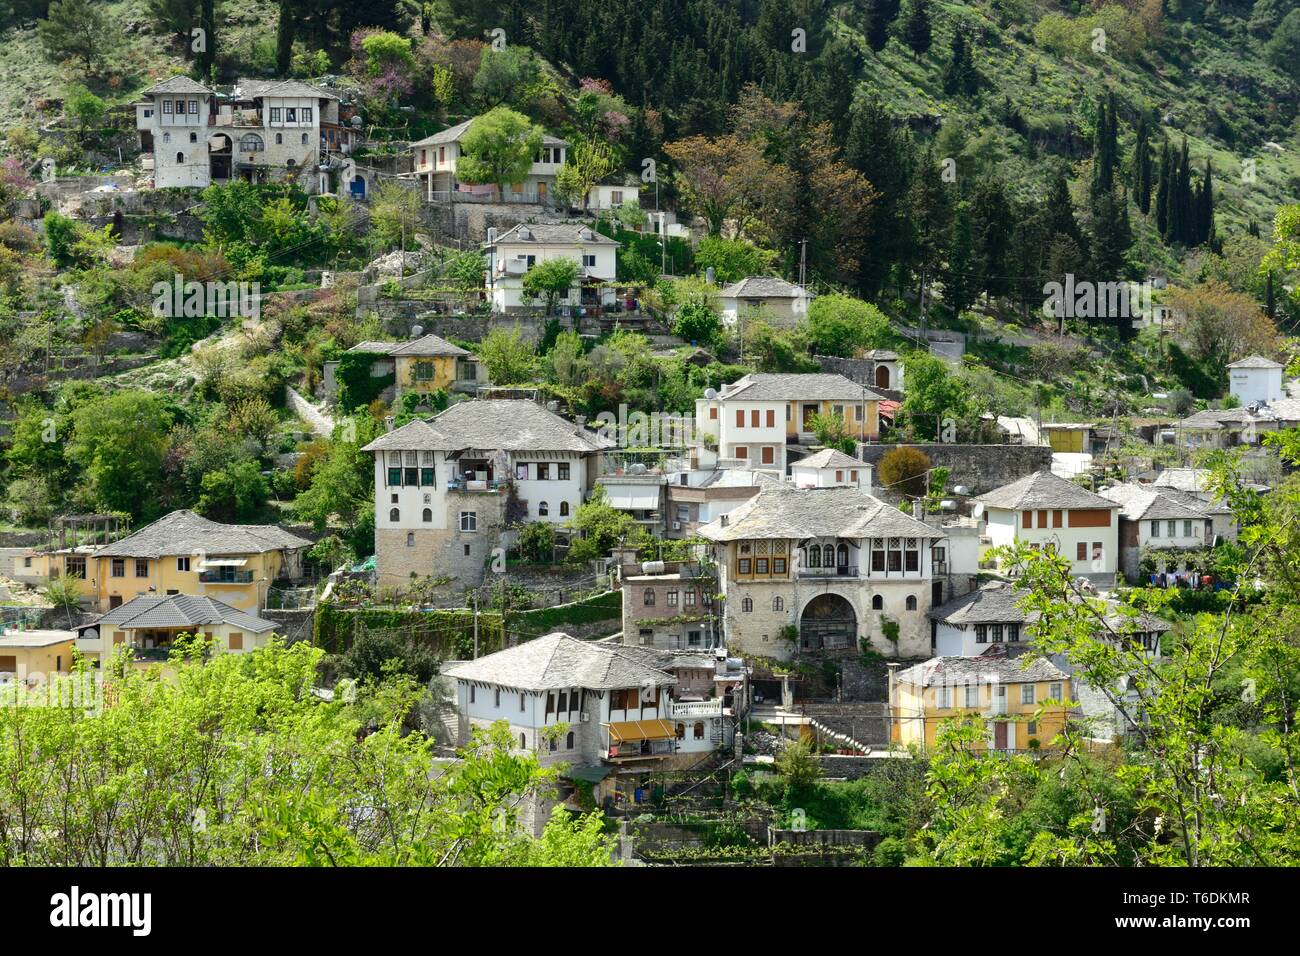 Girokastra city rare example of a well preserved Ottoman town UNESCO World Heritage Site Albania Stock Photo